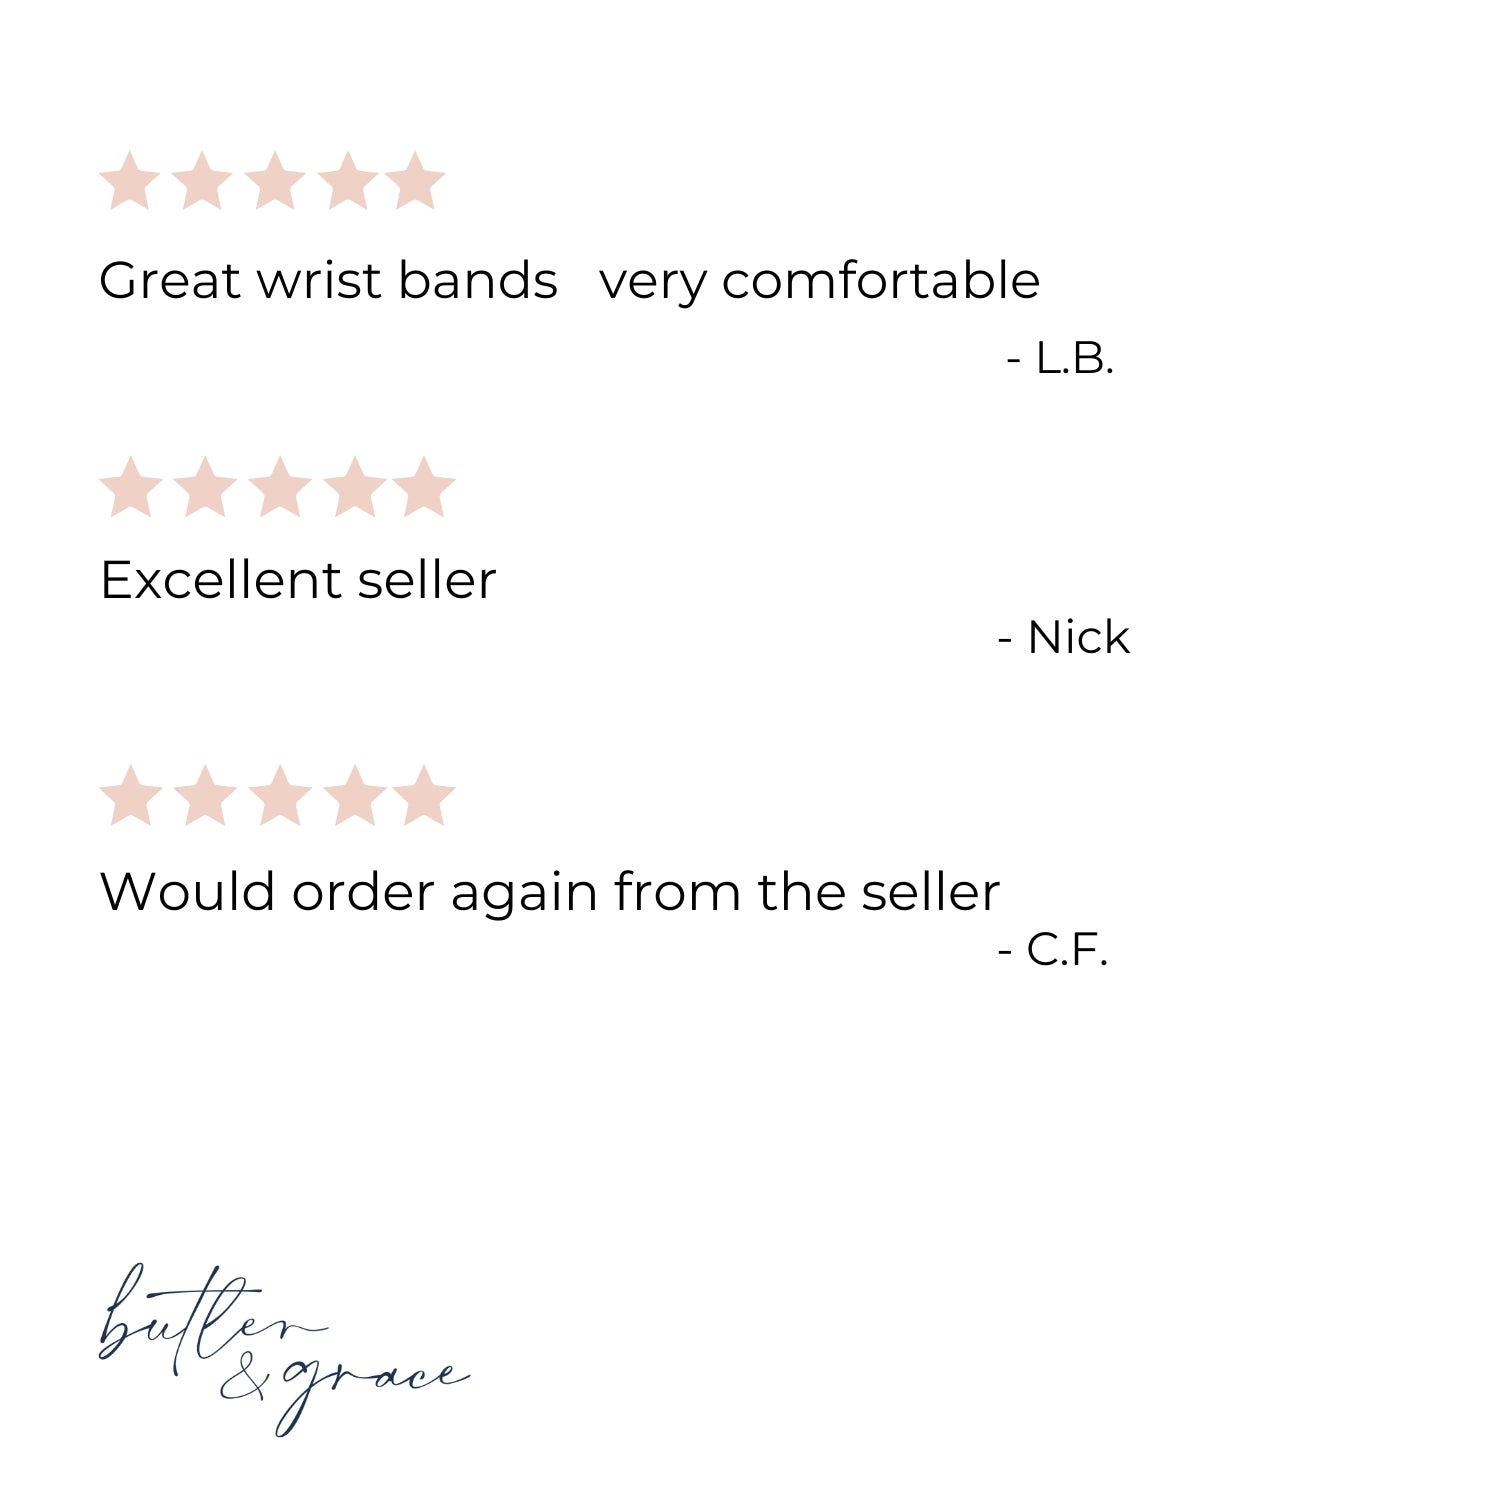 copd wristbands blue reviews